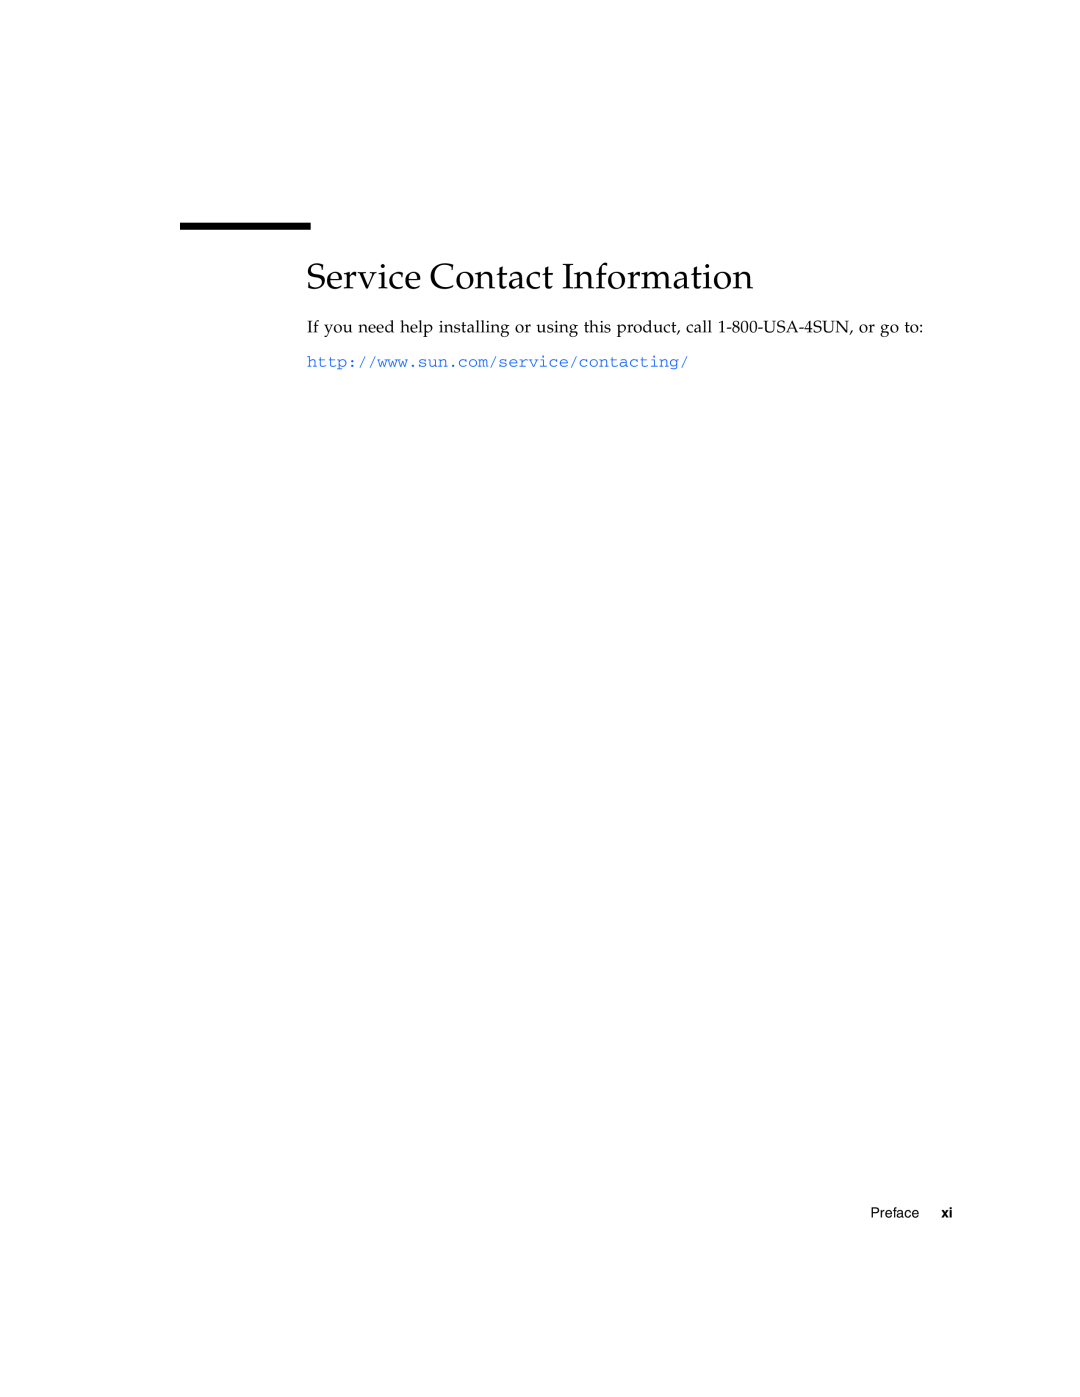 Sun Microsystems 2.0 manual Service Contact Information, Preface 